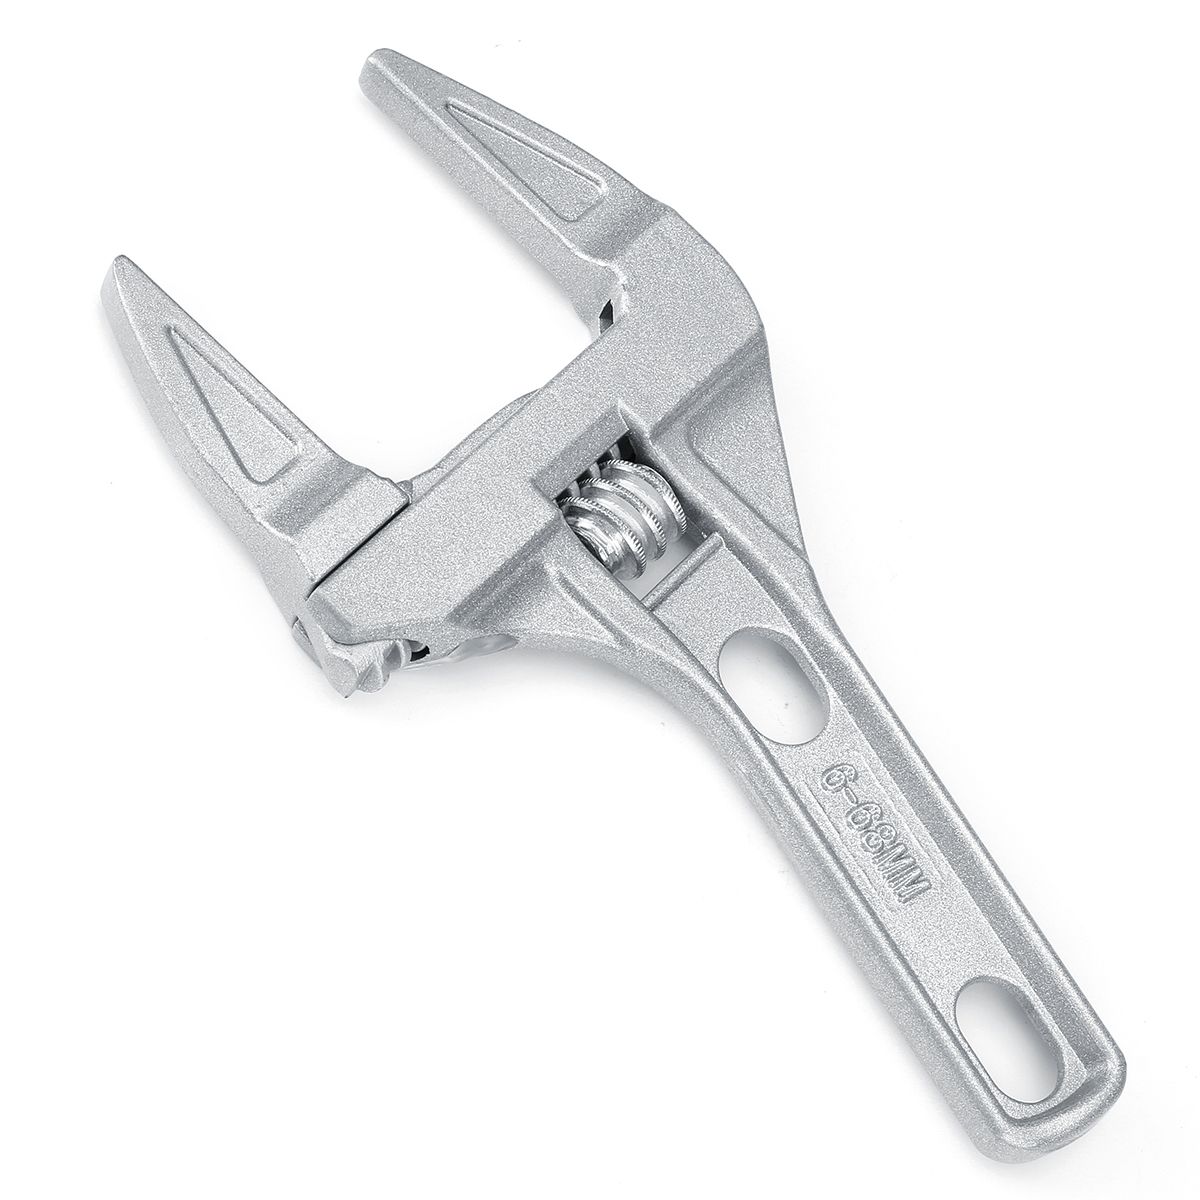 6-68mm-Adjustable-Spanner-Wrench-Large-Openings-Short-Handle-Repair-Hand-Tool-1474721